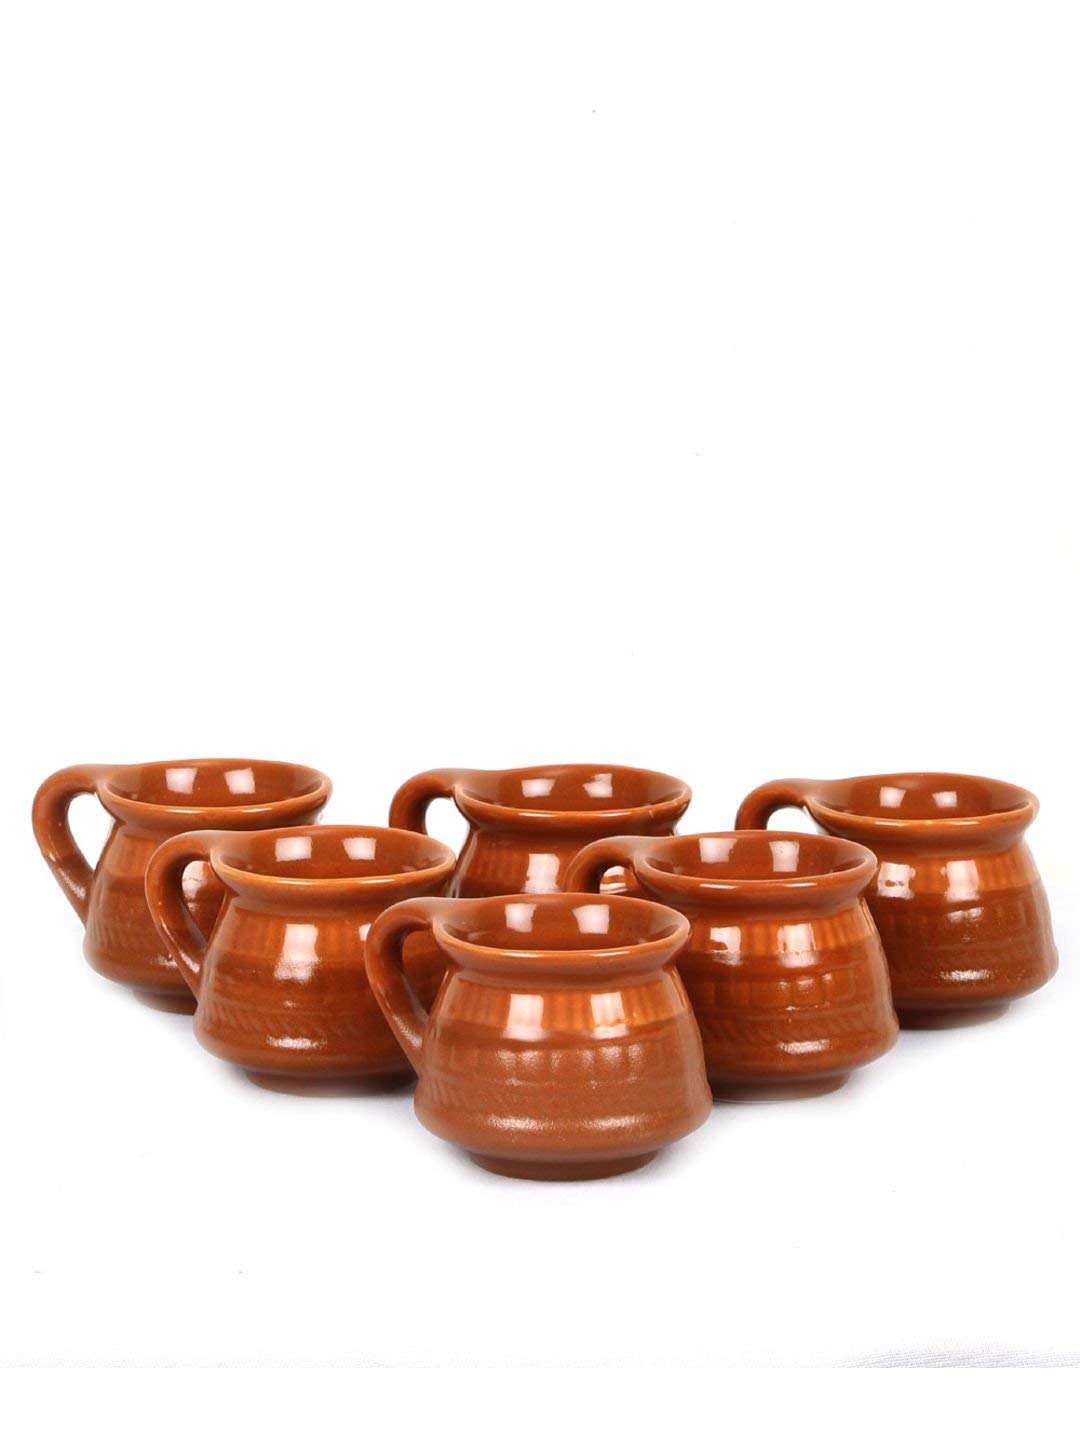 Odishabazaar Ceramic Kulhar Cups Traditional Indian Chai Tea Cup Set of 6 (skc-47)